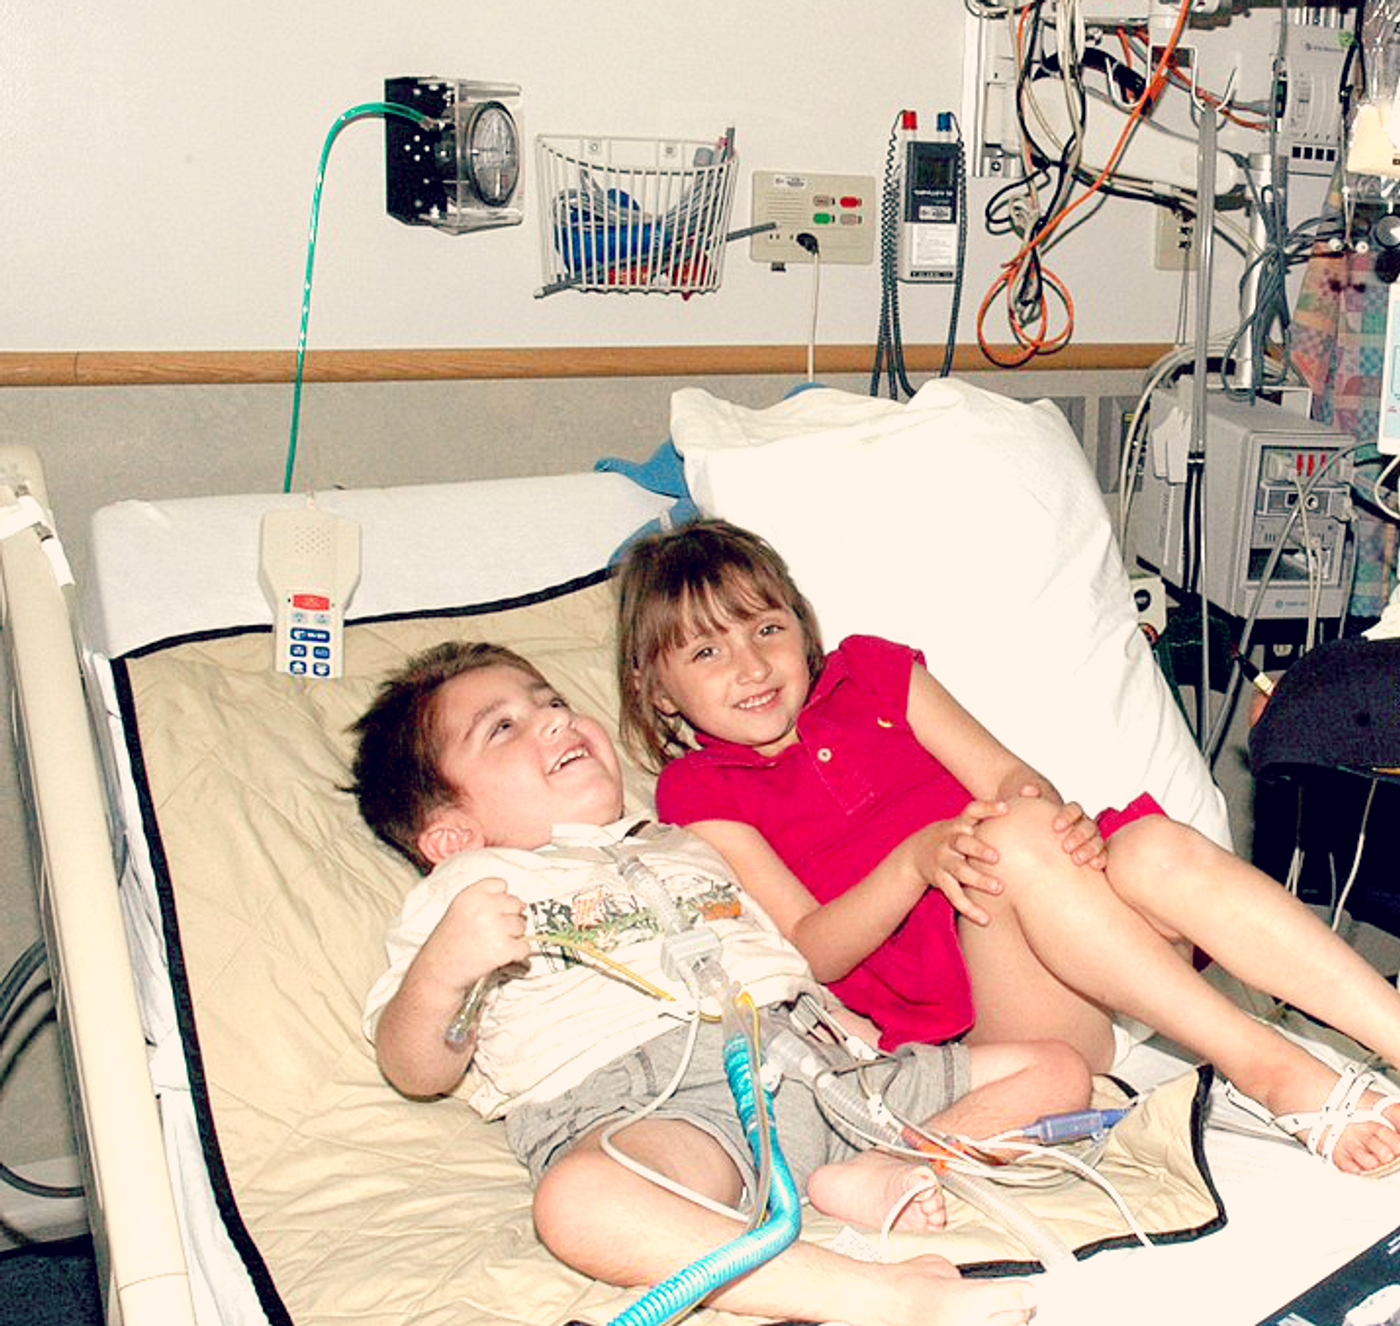 Siblings in a hospital, credit: public domain